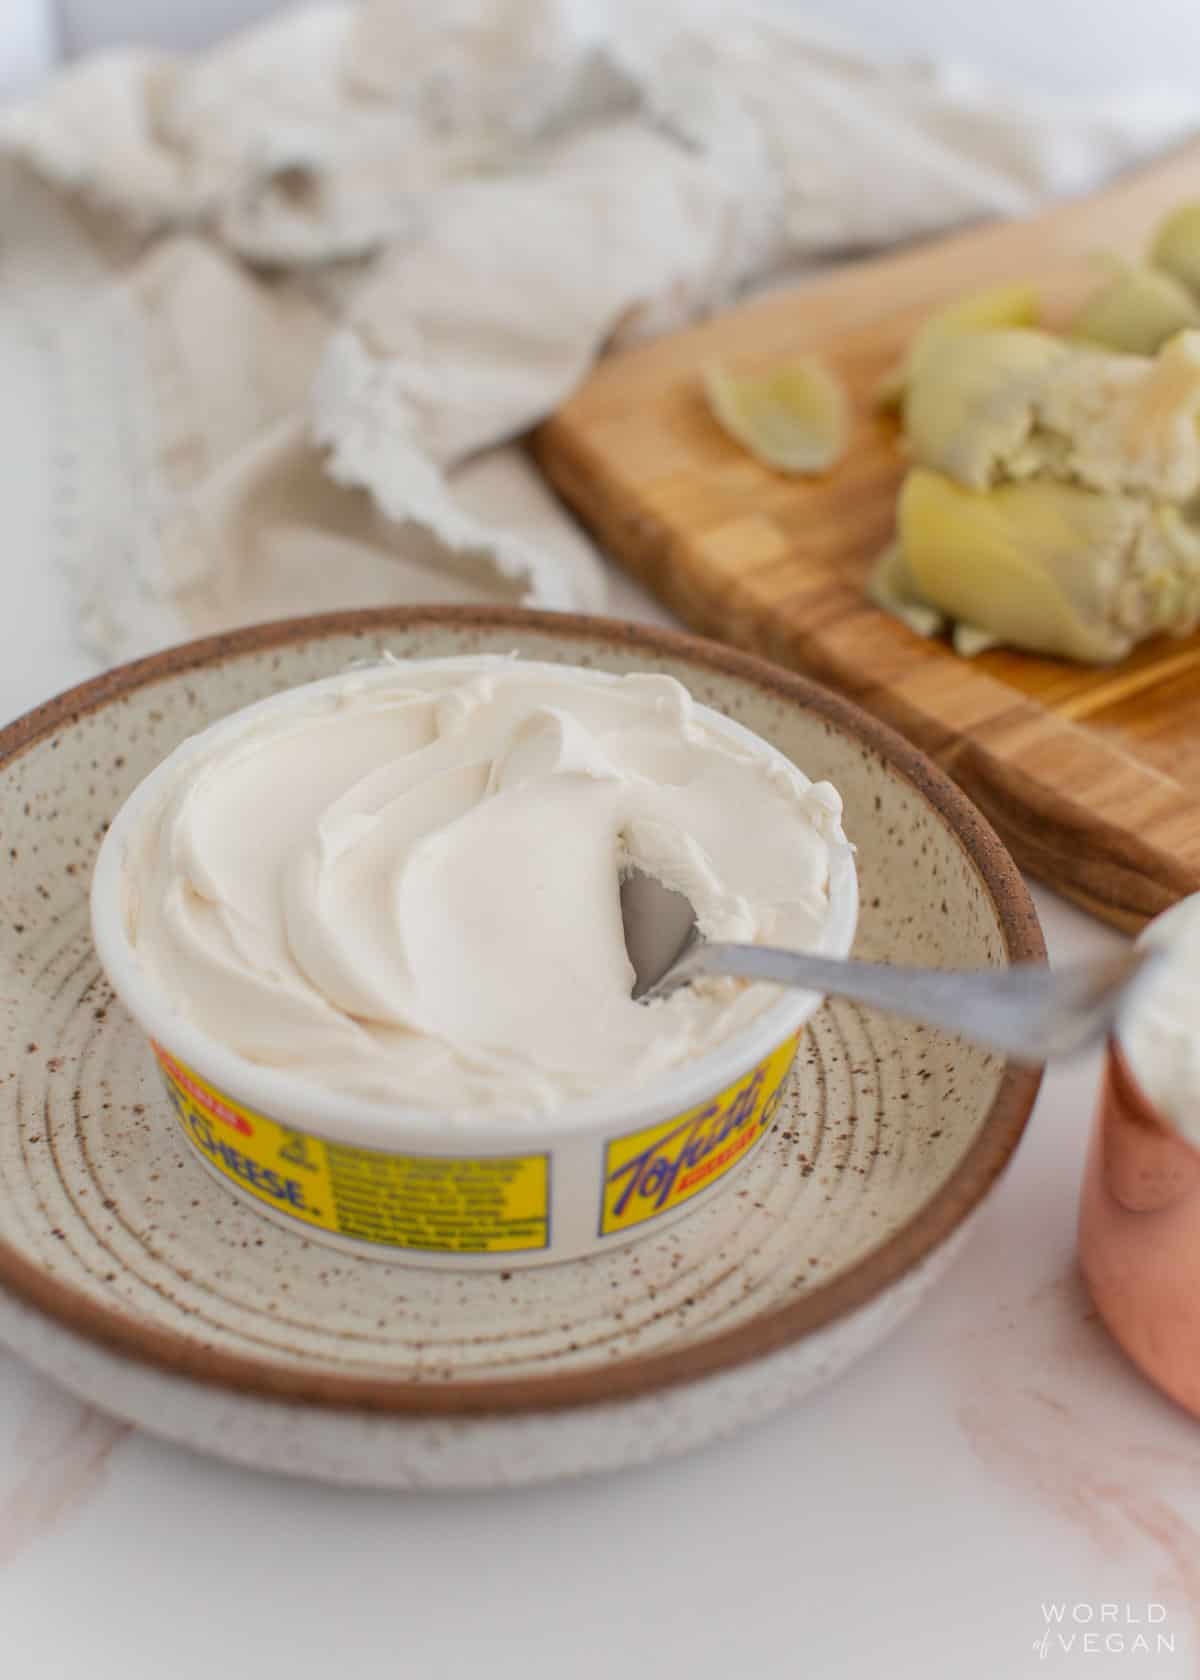 open container of tofutti vegan dairy free cream cheese